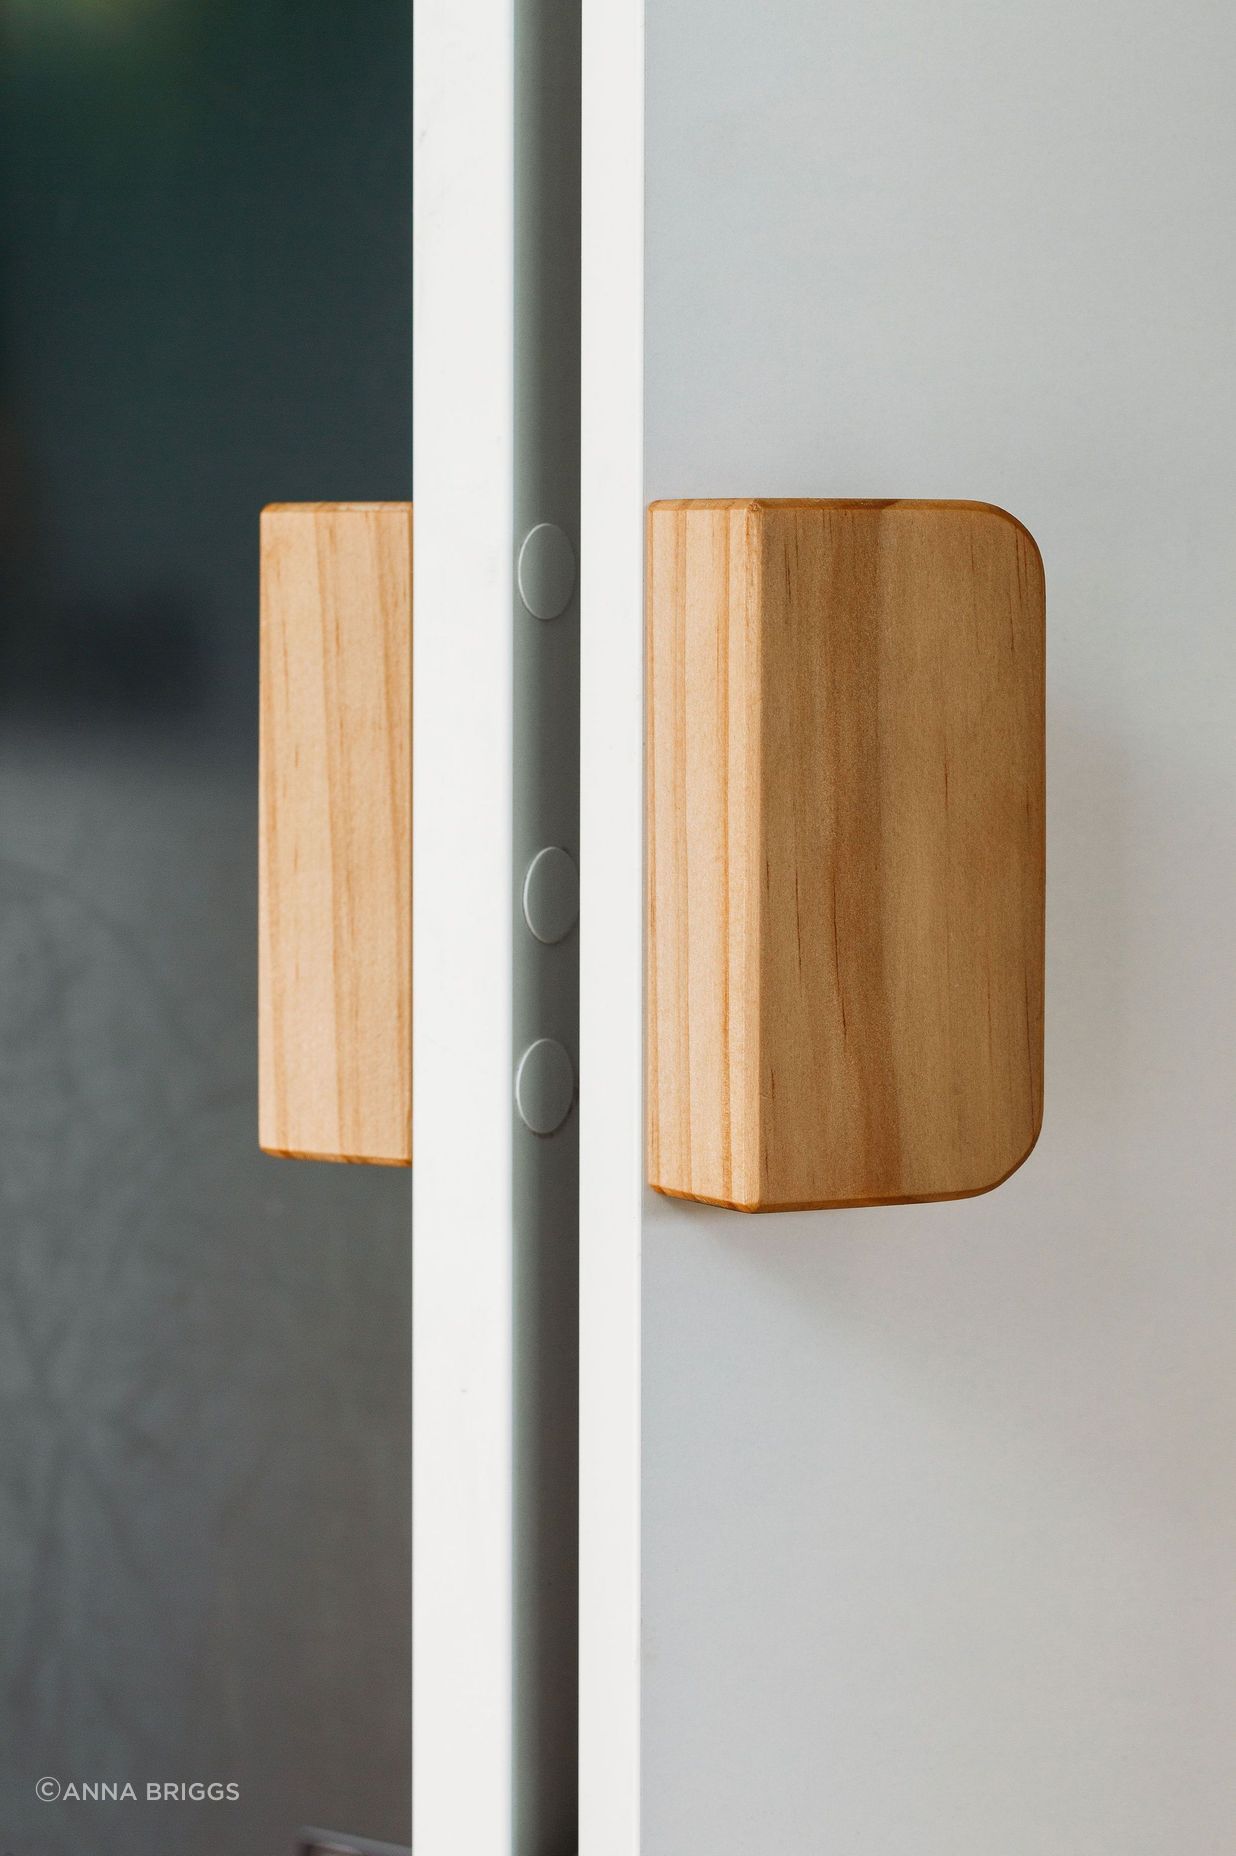 Lovely custom timber pull handles for the pantry.